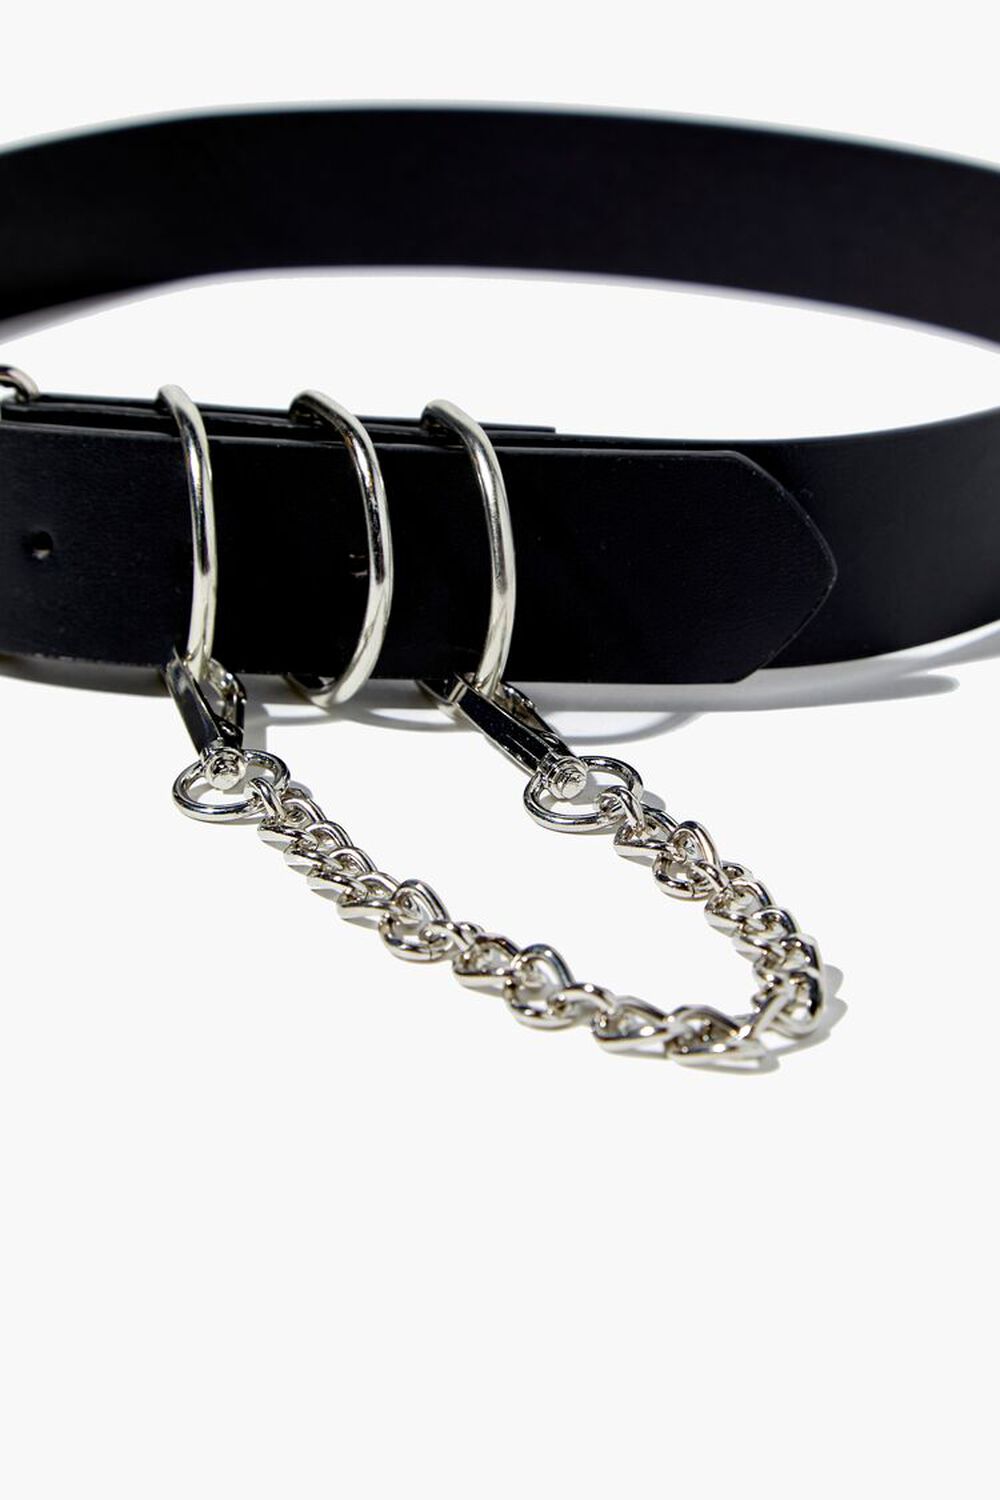 BLACK/SILVER Faux Leather Wallet Chain Belt, image 3